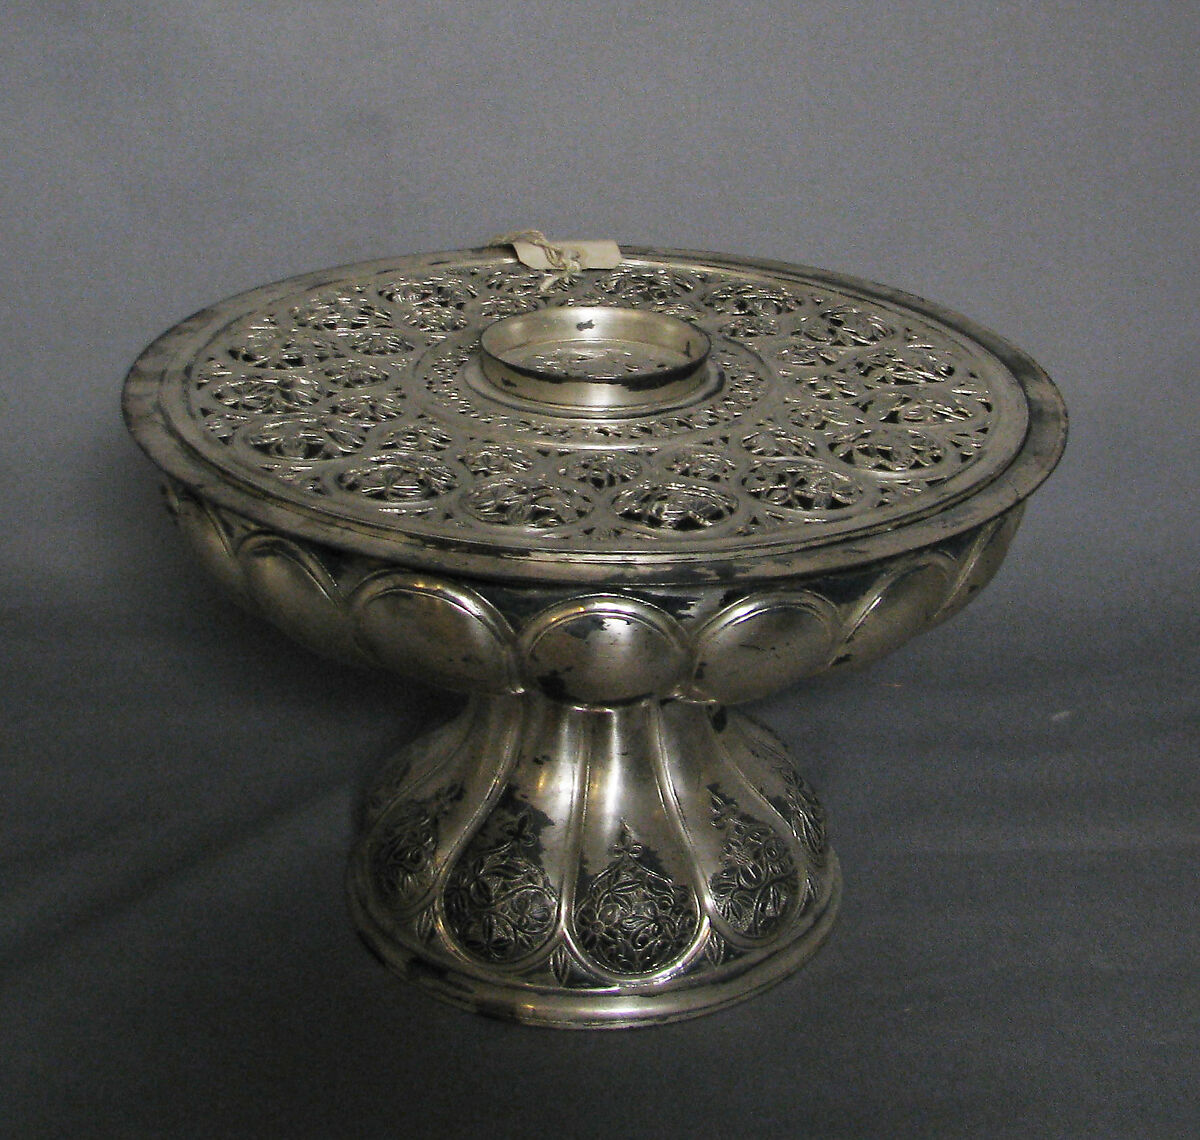 Bowl or basin, Silver on base metal, British, after Russian original 